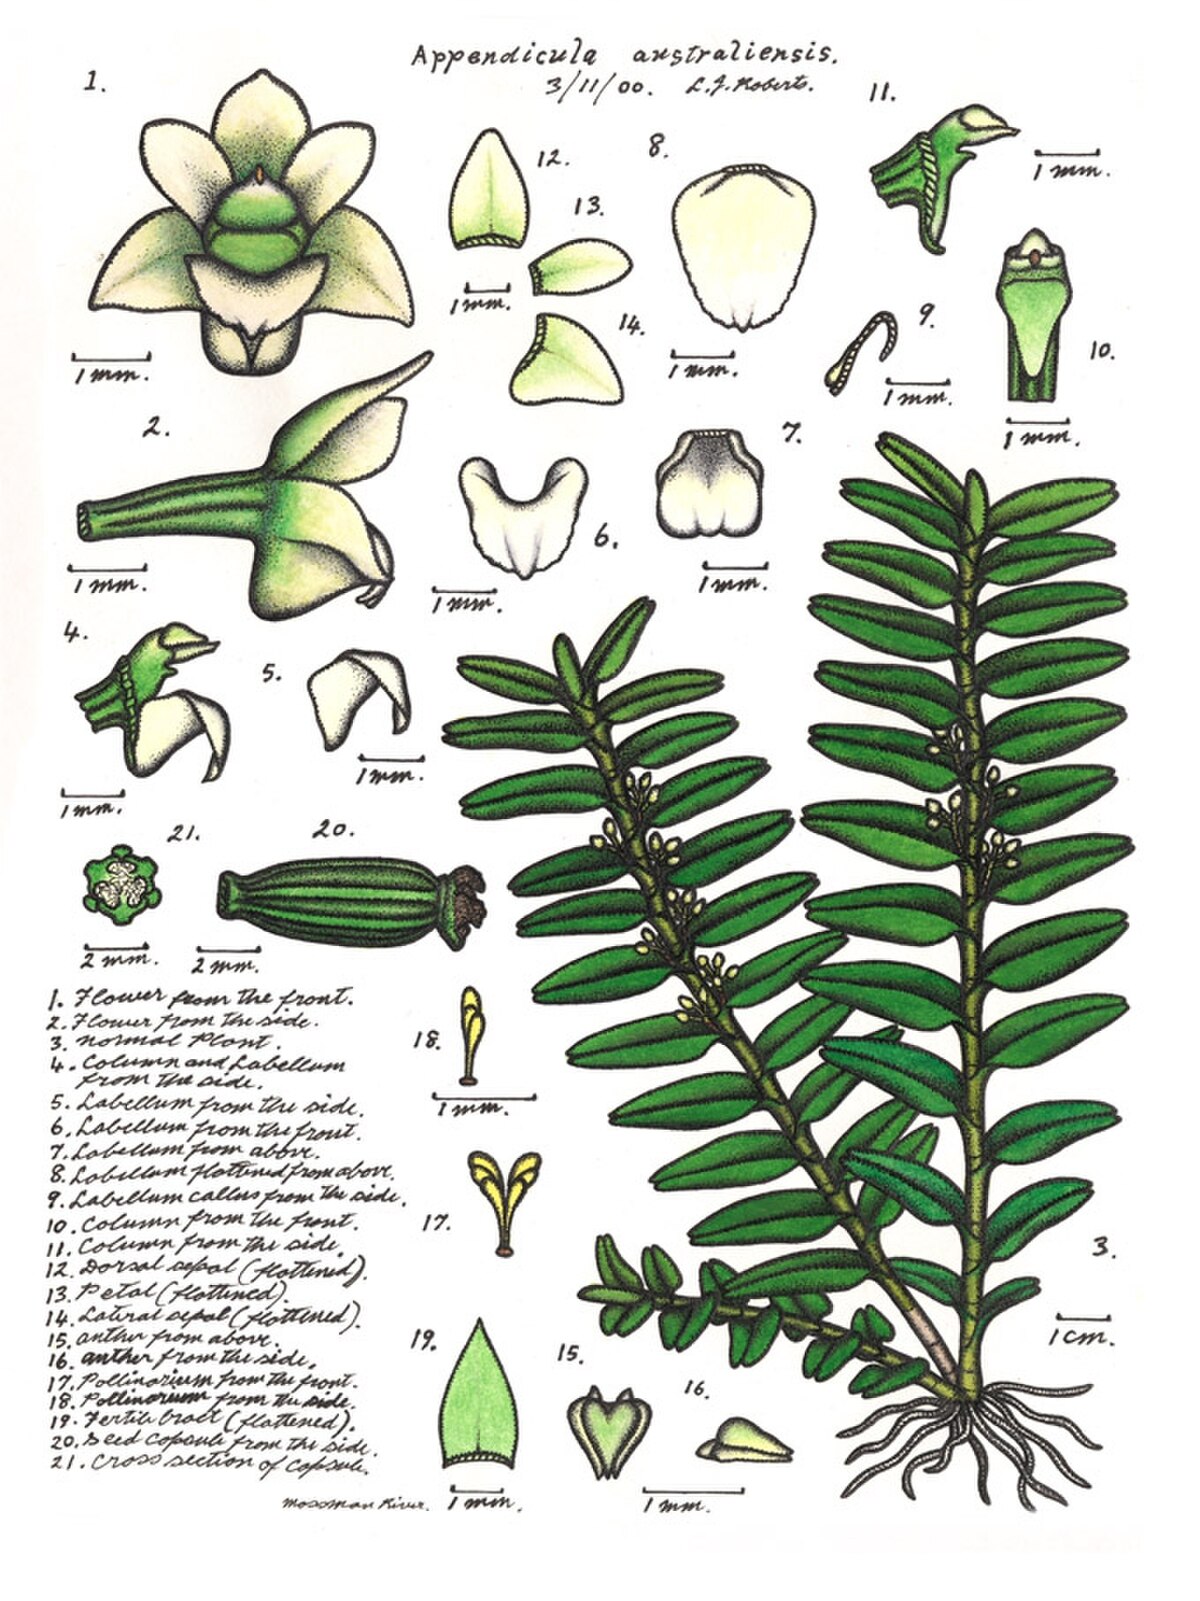 Appendicula australiensis